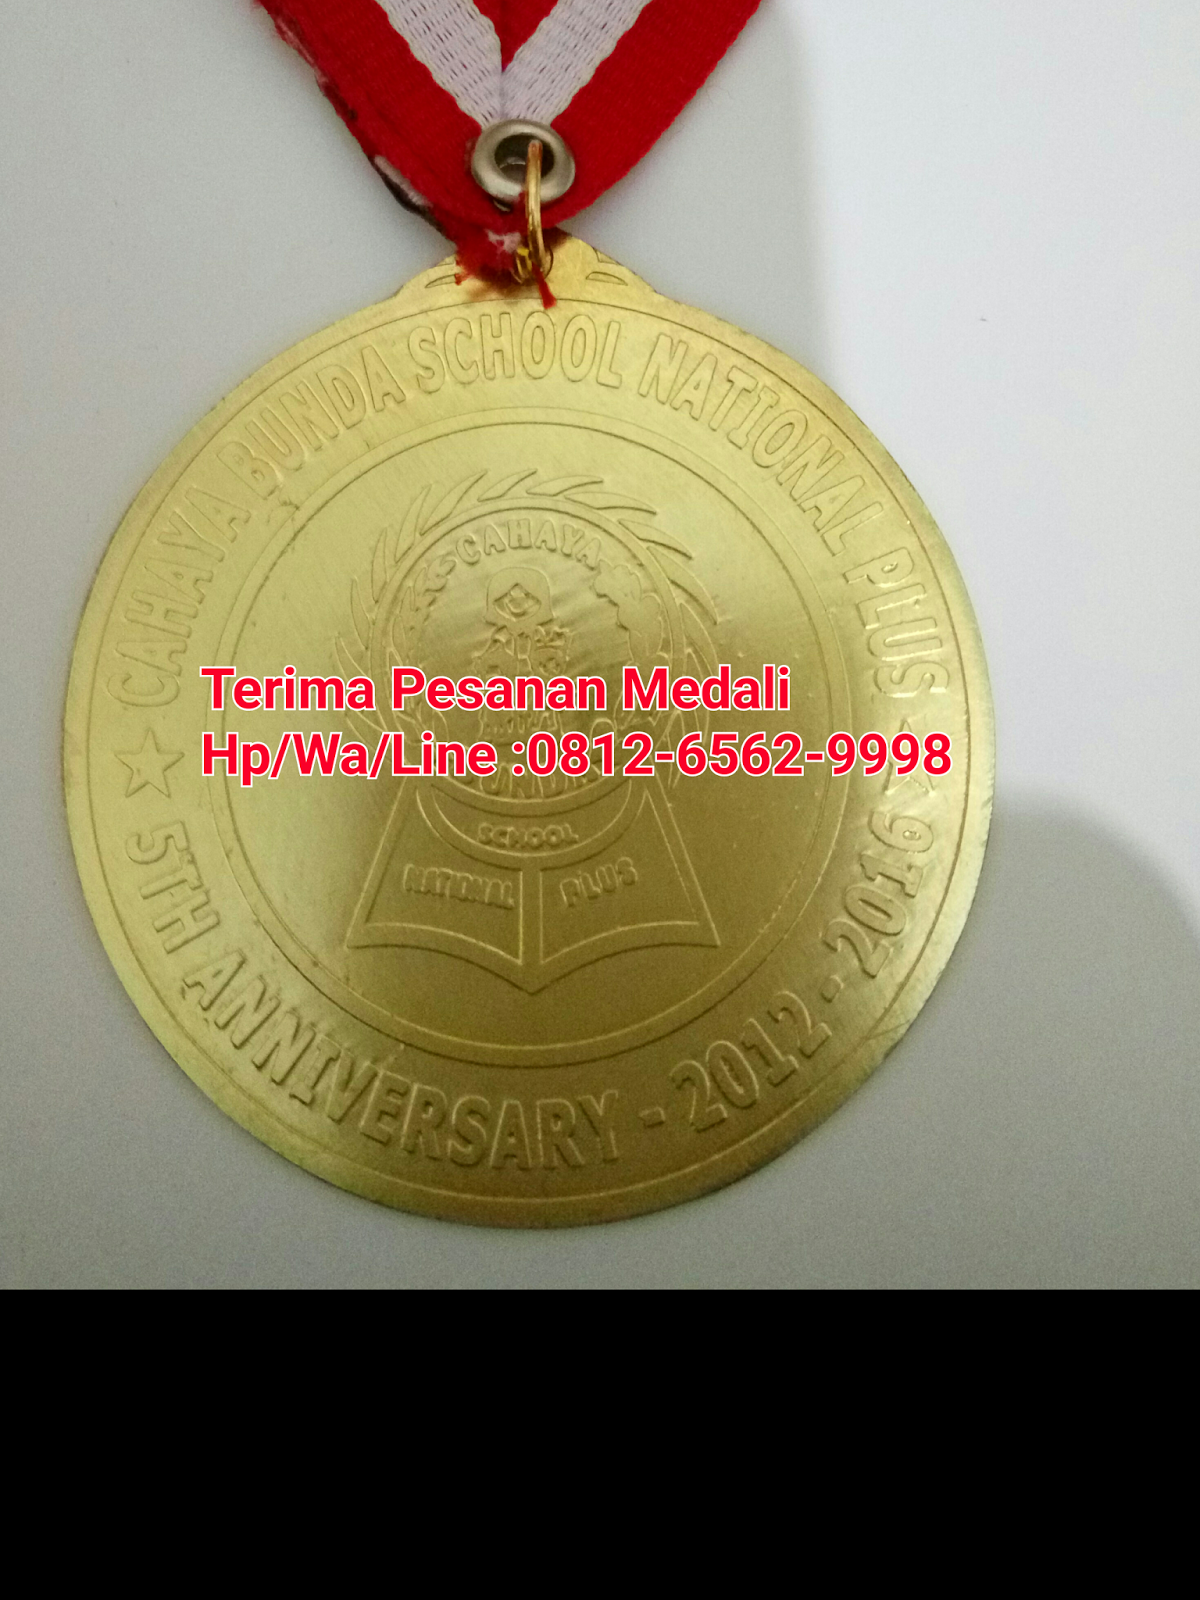 AnekaBukuMurah: Terima Pesanan Medali Kejuaaraan Hp/Wa 